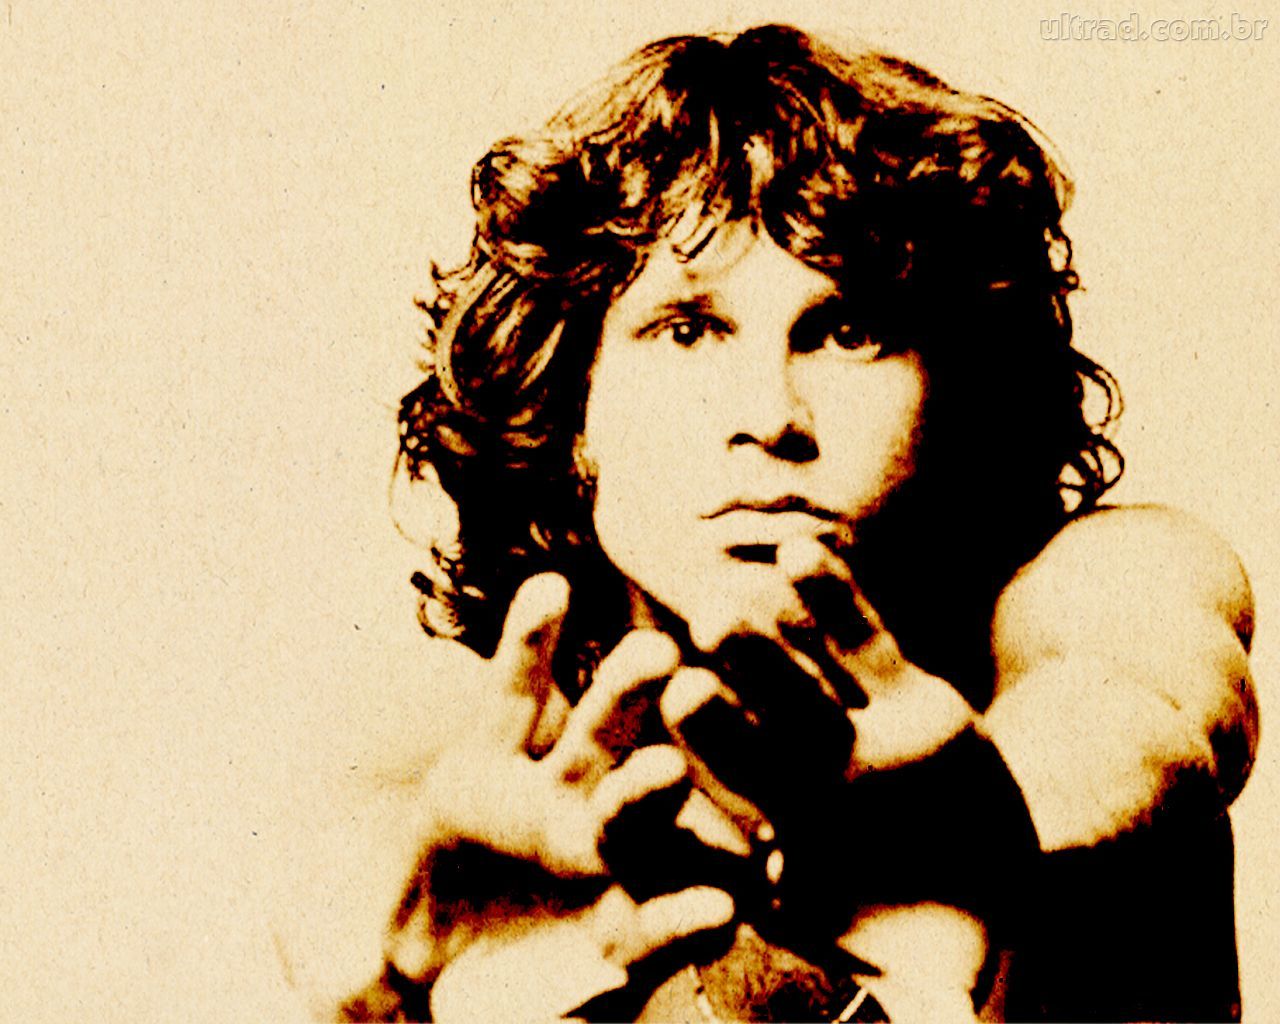 Jim Morrison wallpaper, Music, HQ Jim Morrison pictureK Wallpaper 2019